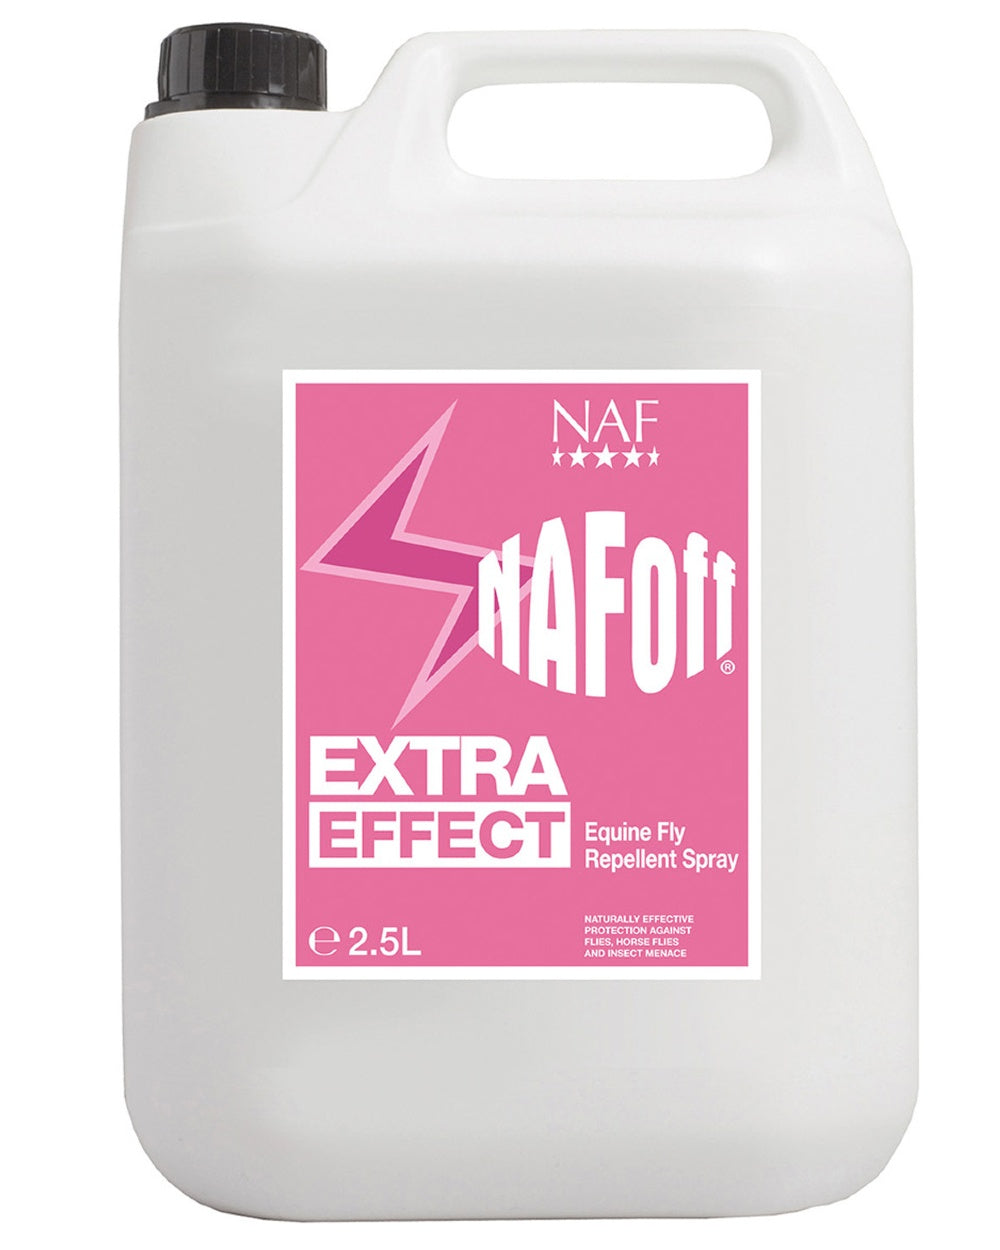 NAF Off Extra Effect 2.5lt on white background